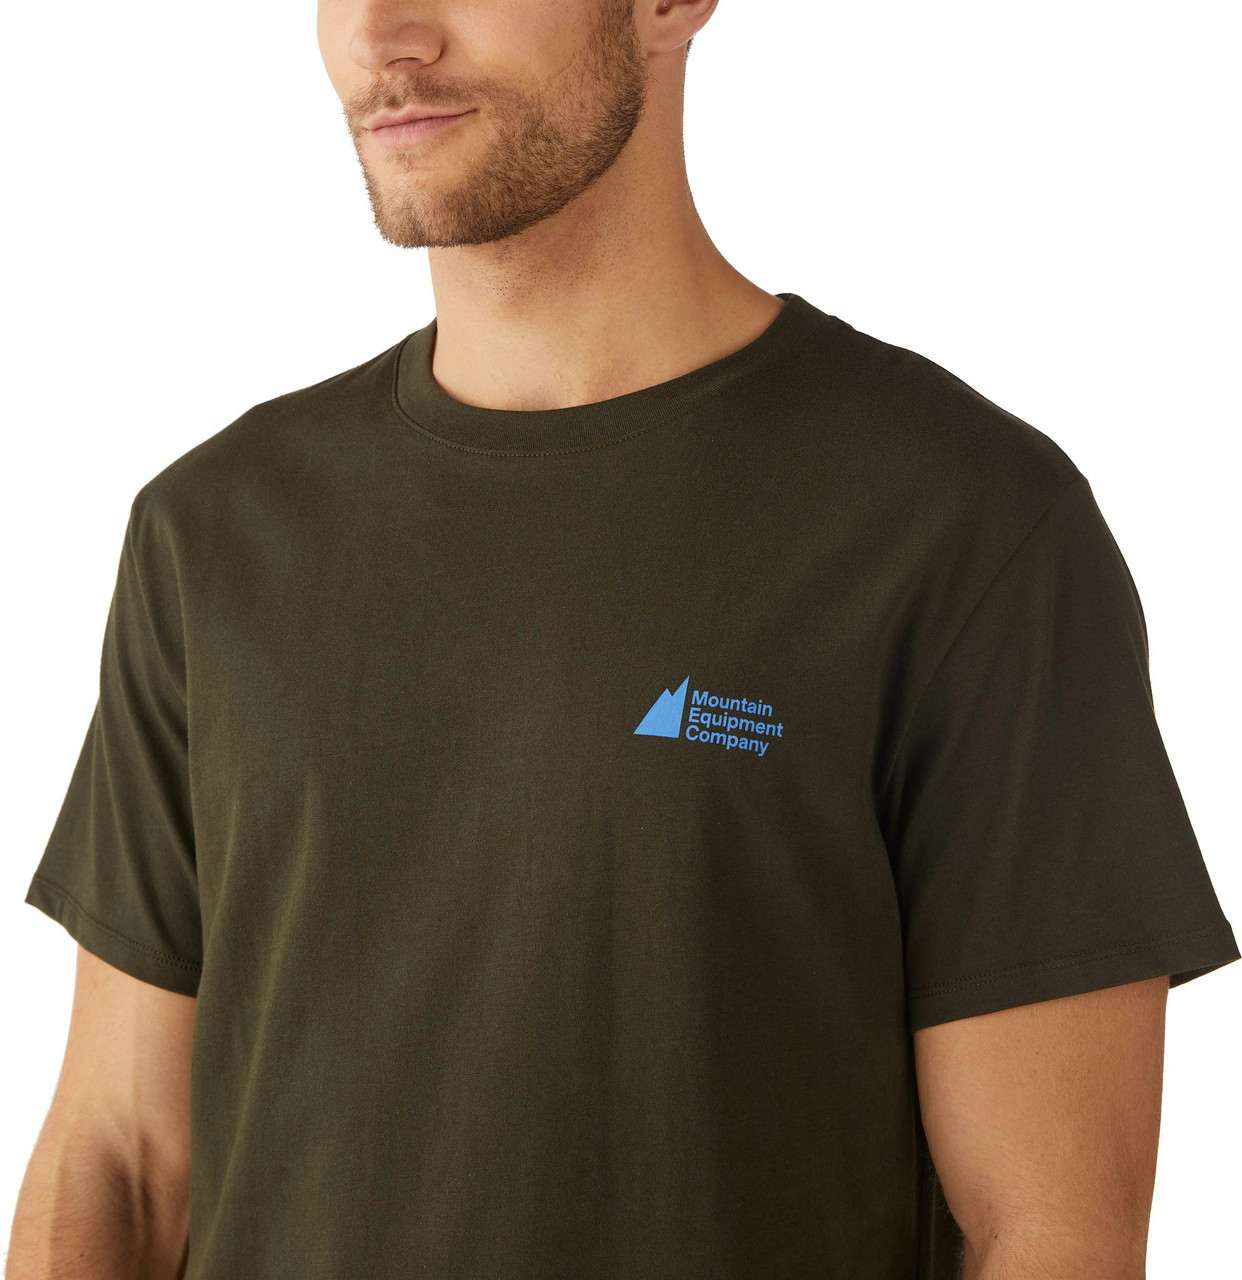 Fair Trade Short Sleeve T-Shirt Basil